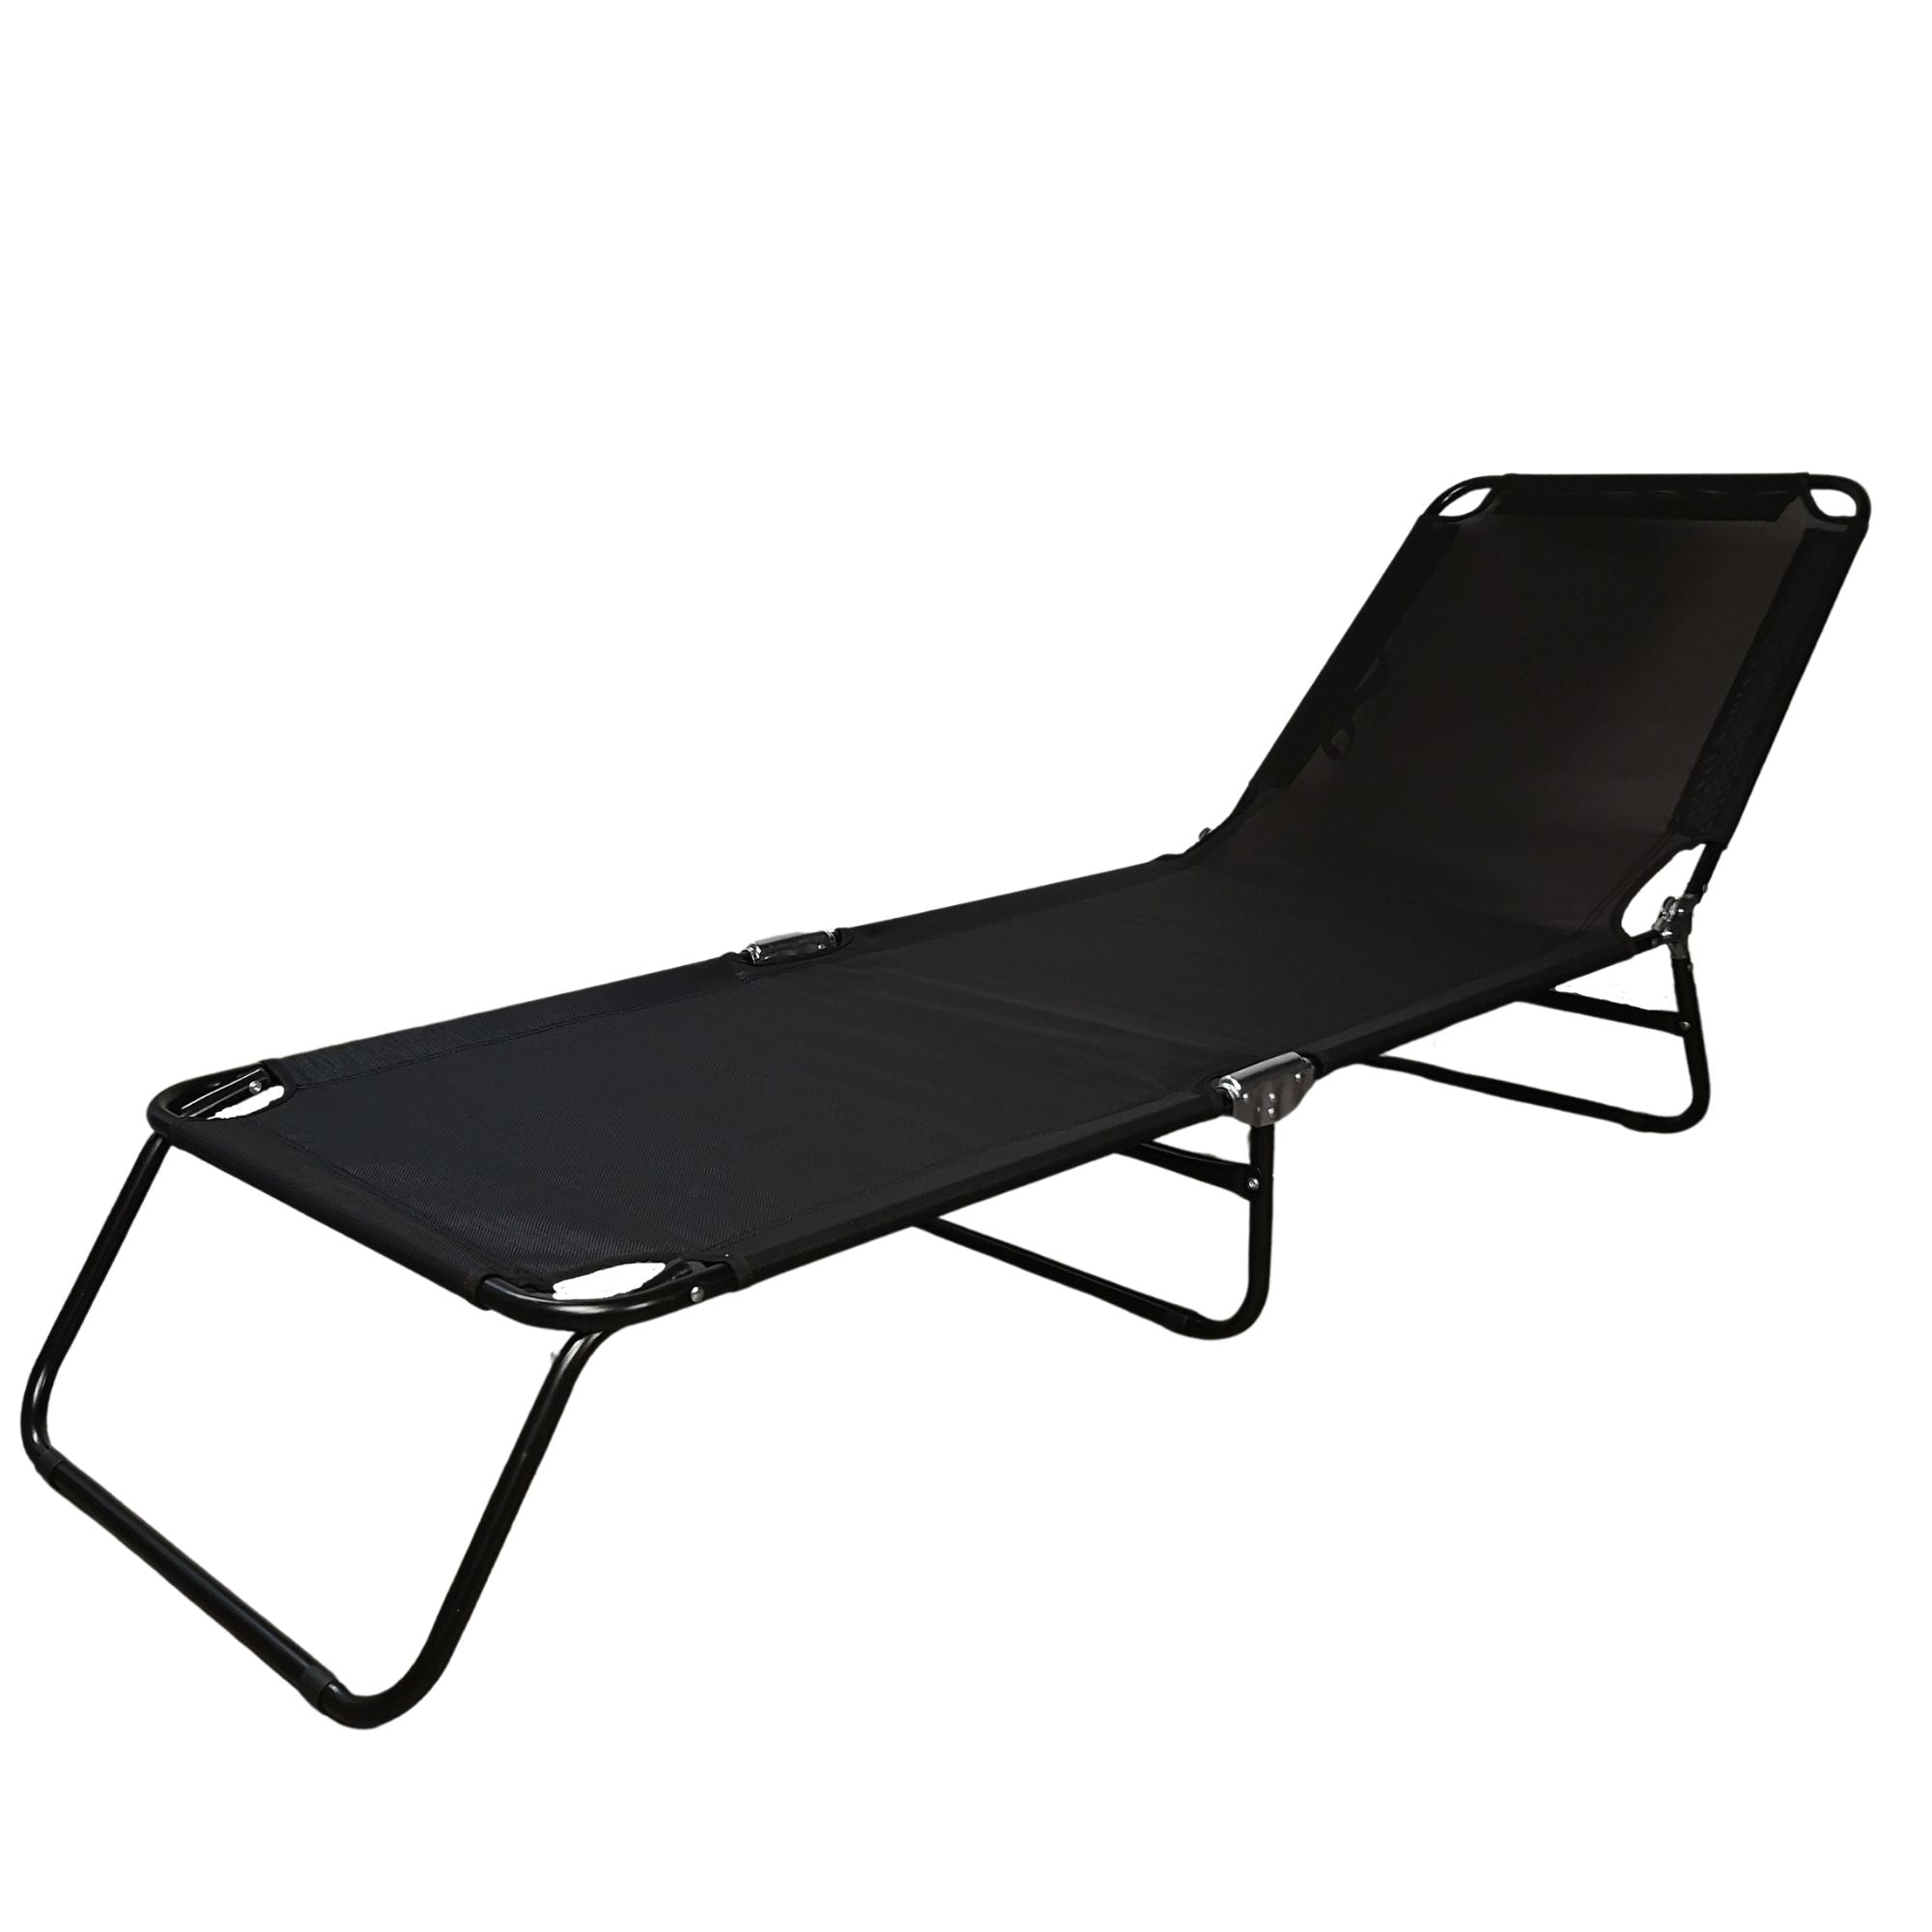 Lightweight Foldable Garden Patio Textoline Sun Lounger Bed in Black